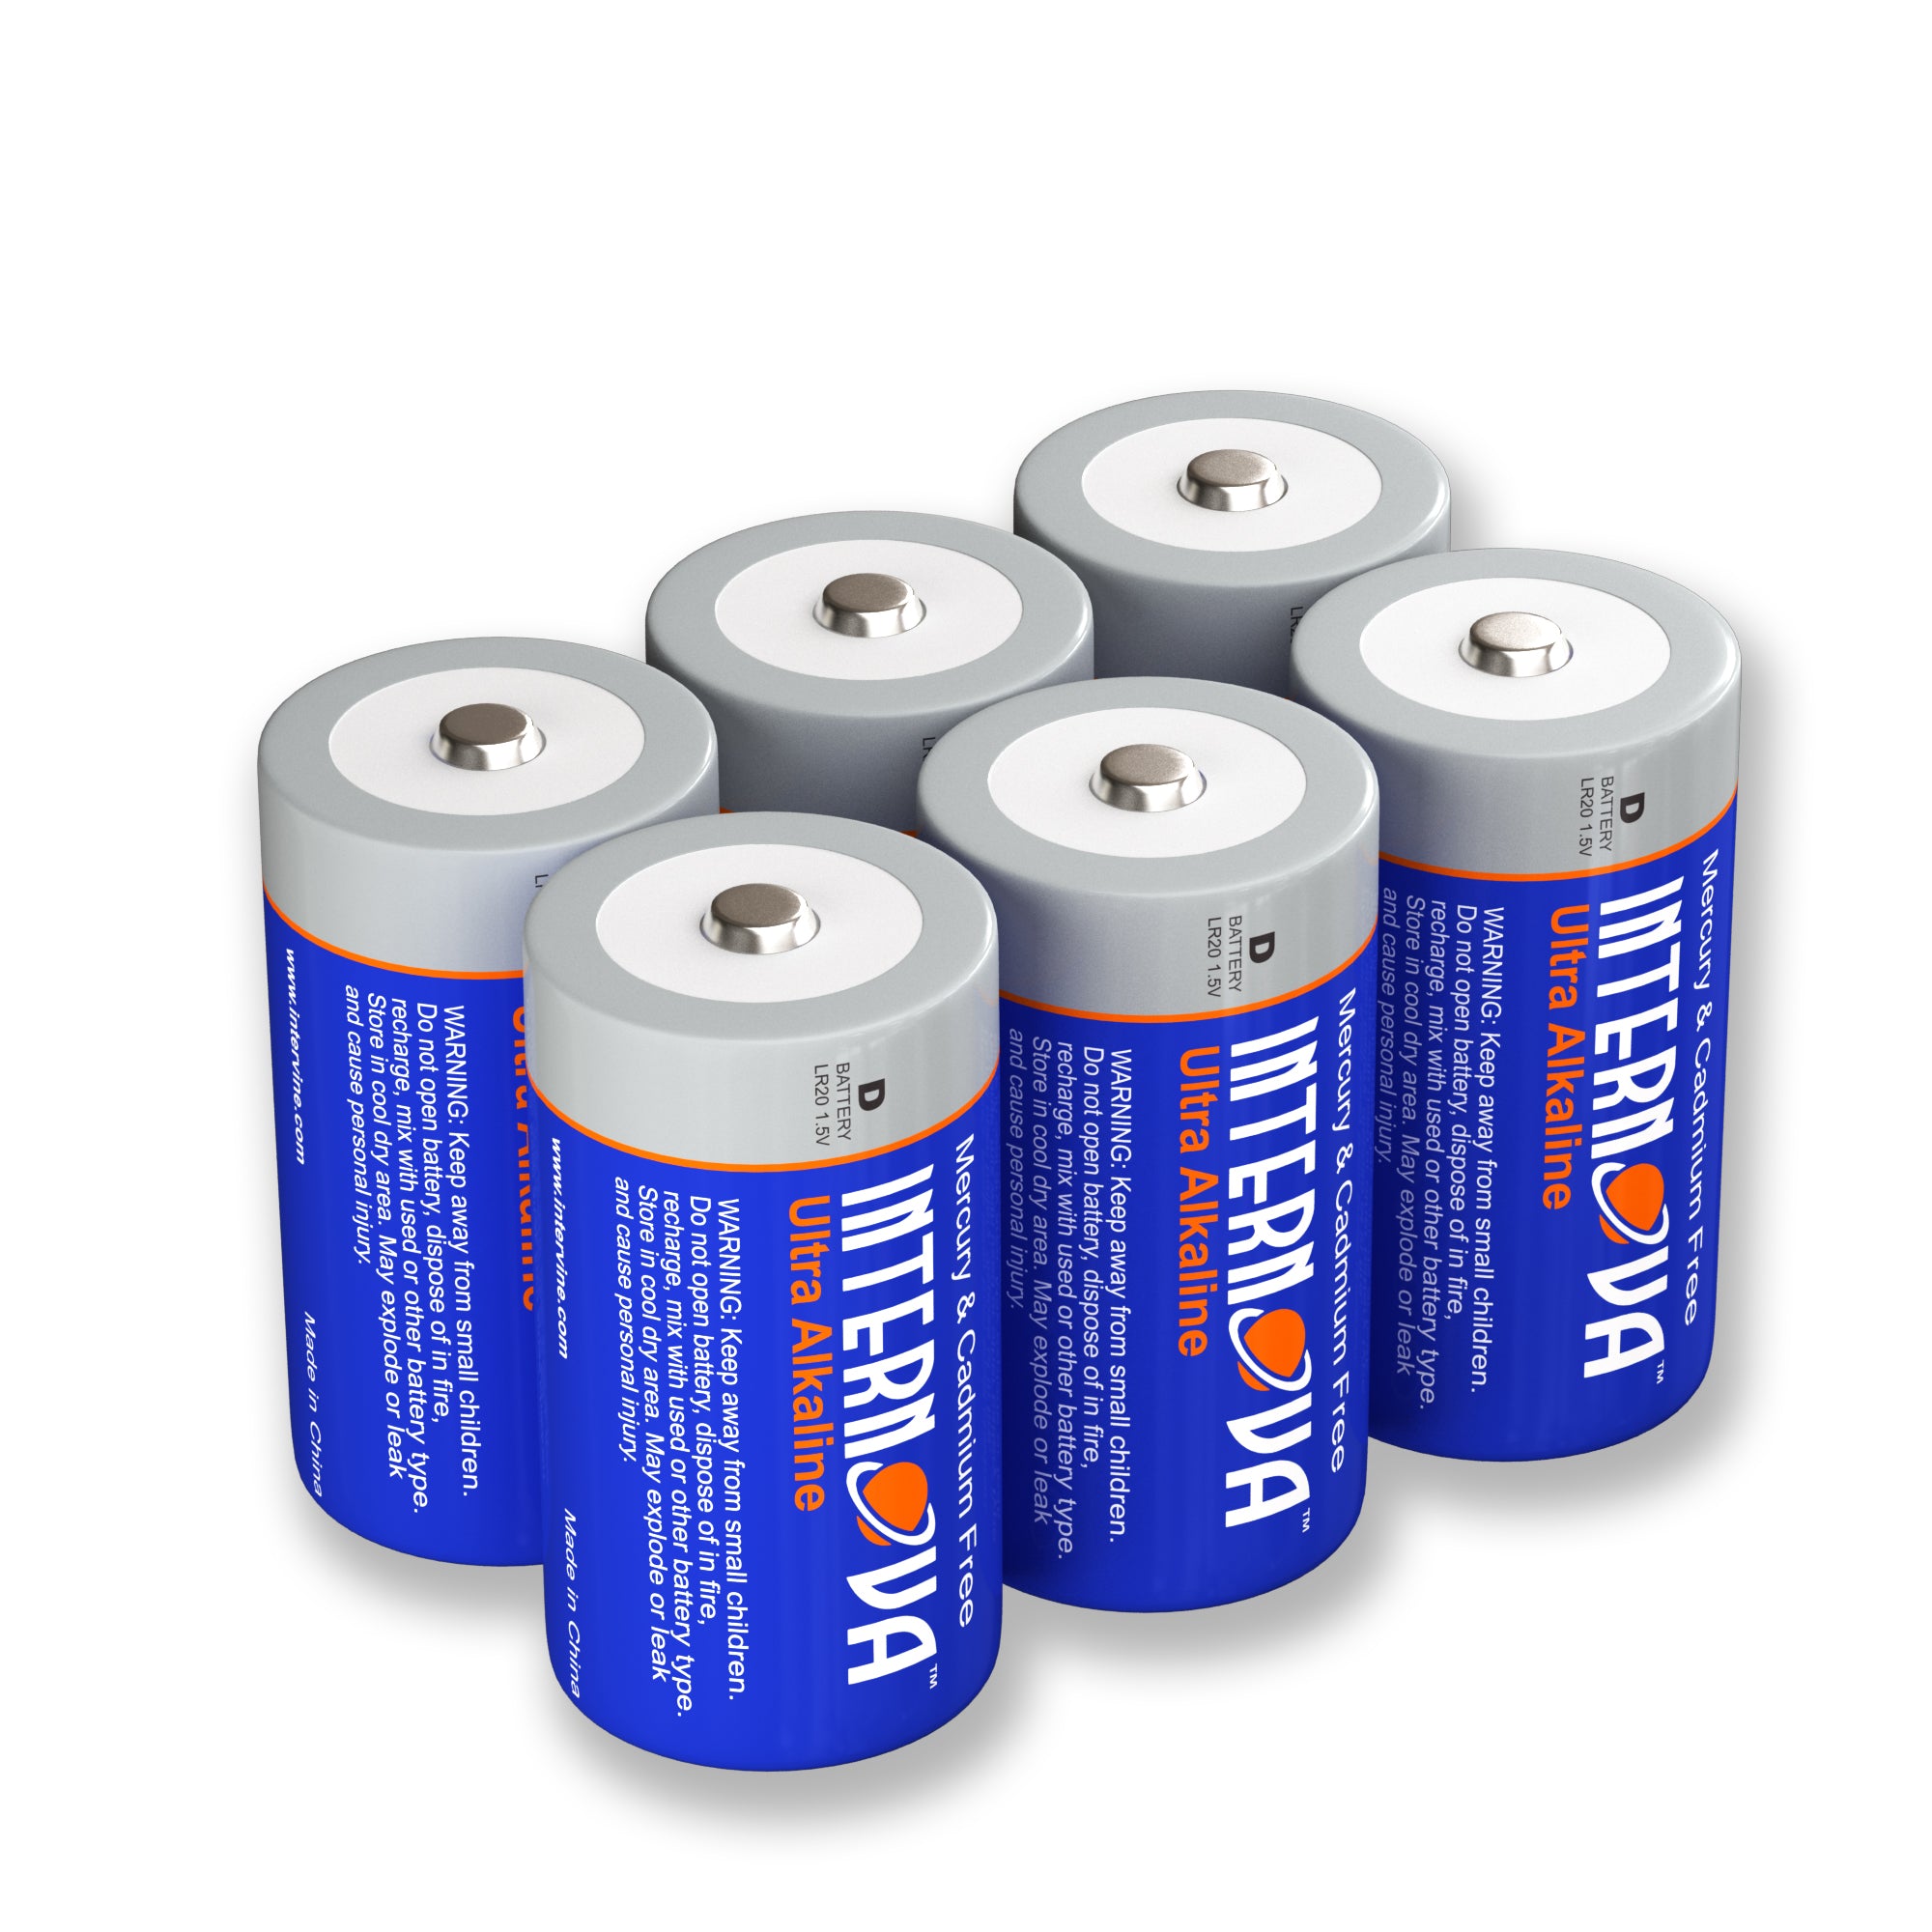 Internova Ultra Alkaline D Batteries, LR20 1.5V Cell High Performance, 6 Pack